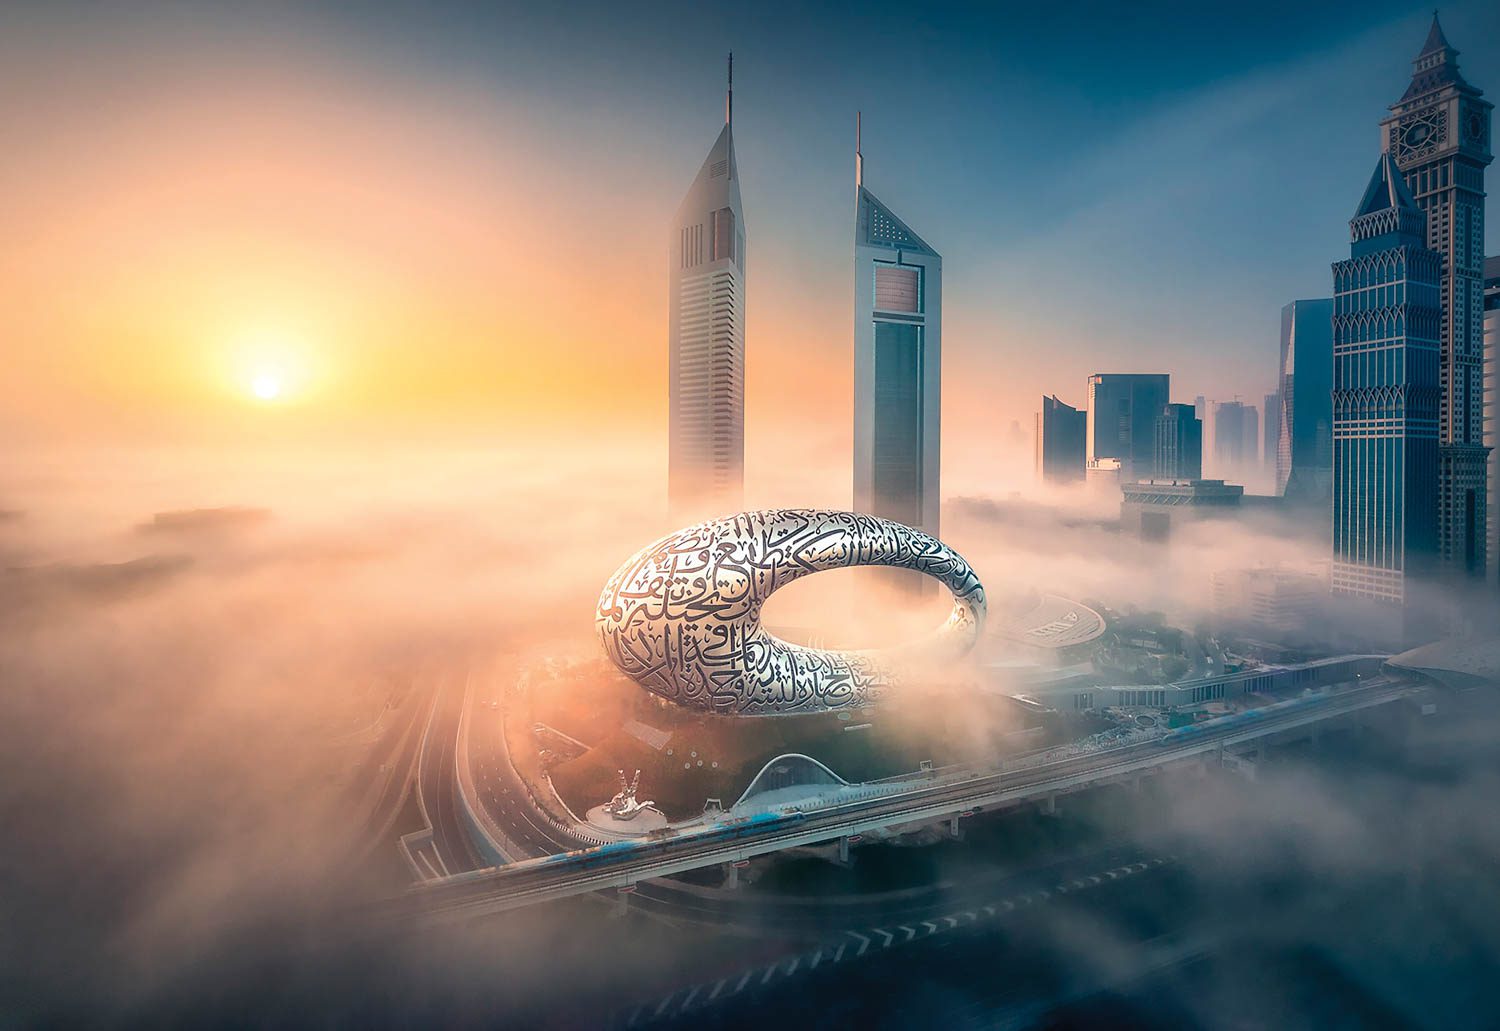 Museum of the Future in Dubai